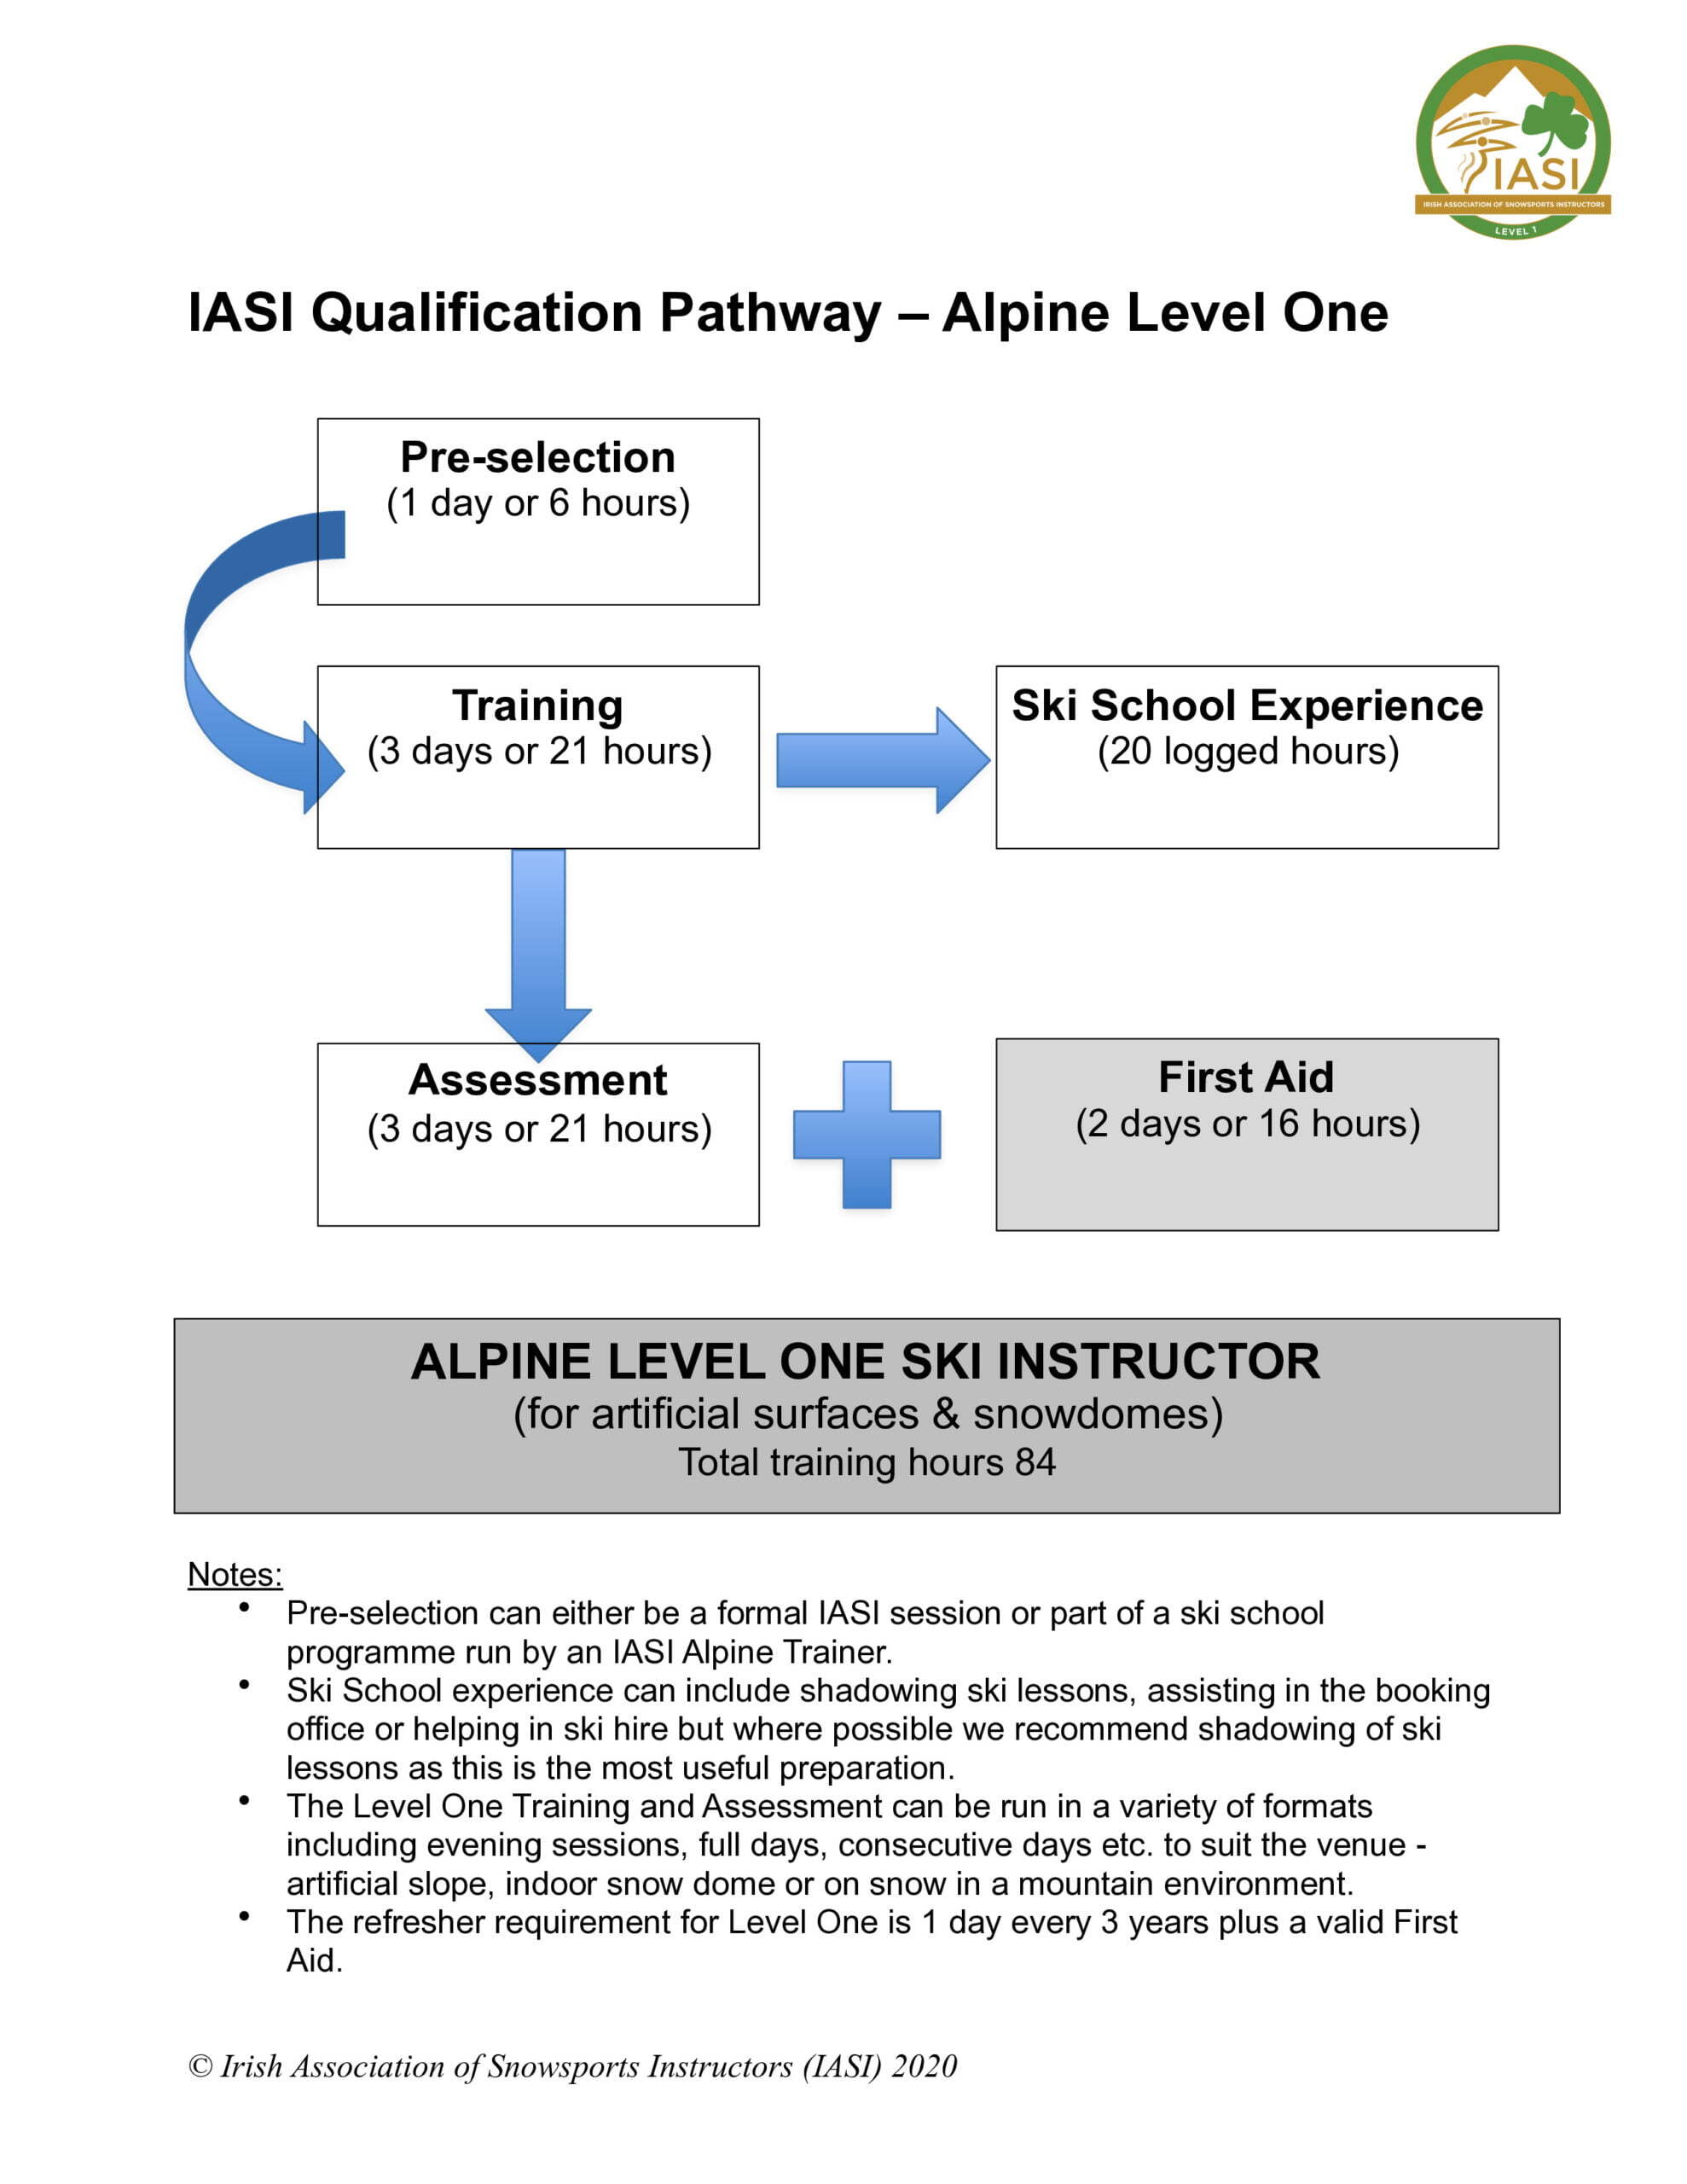 IASI Qualification Pathway Alpine Level 1